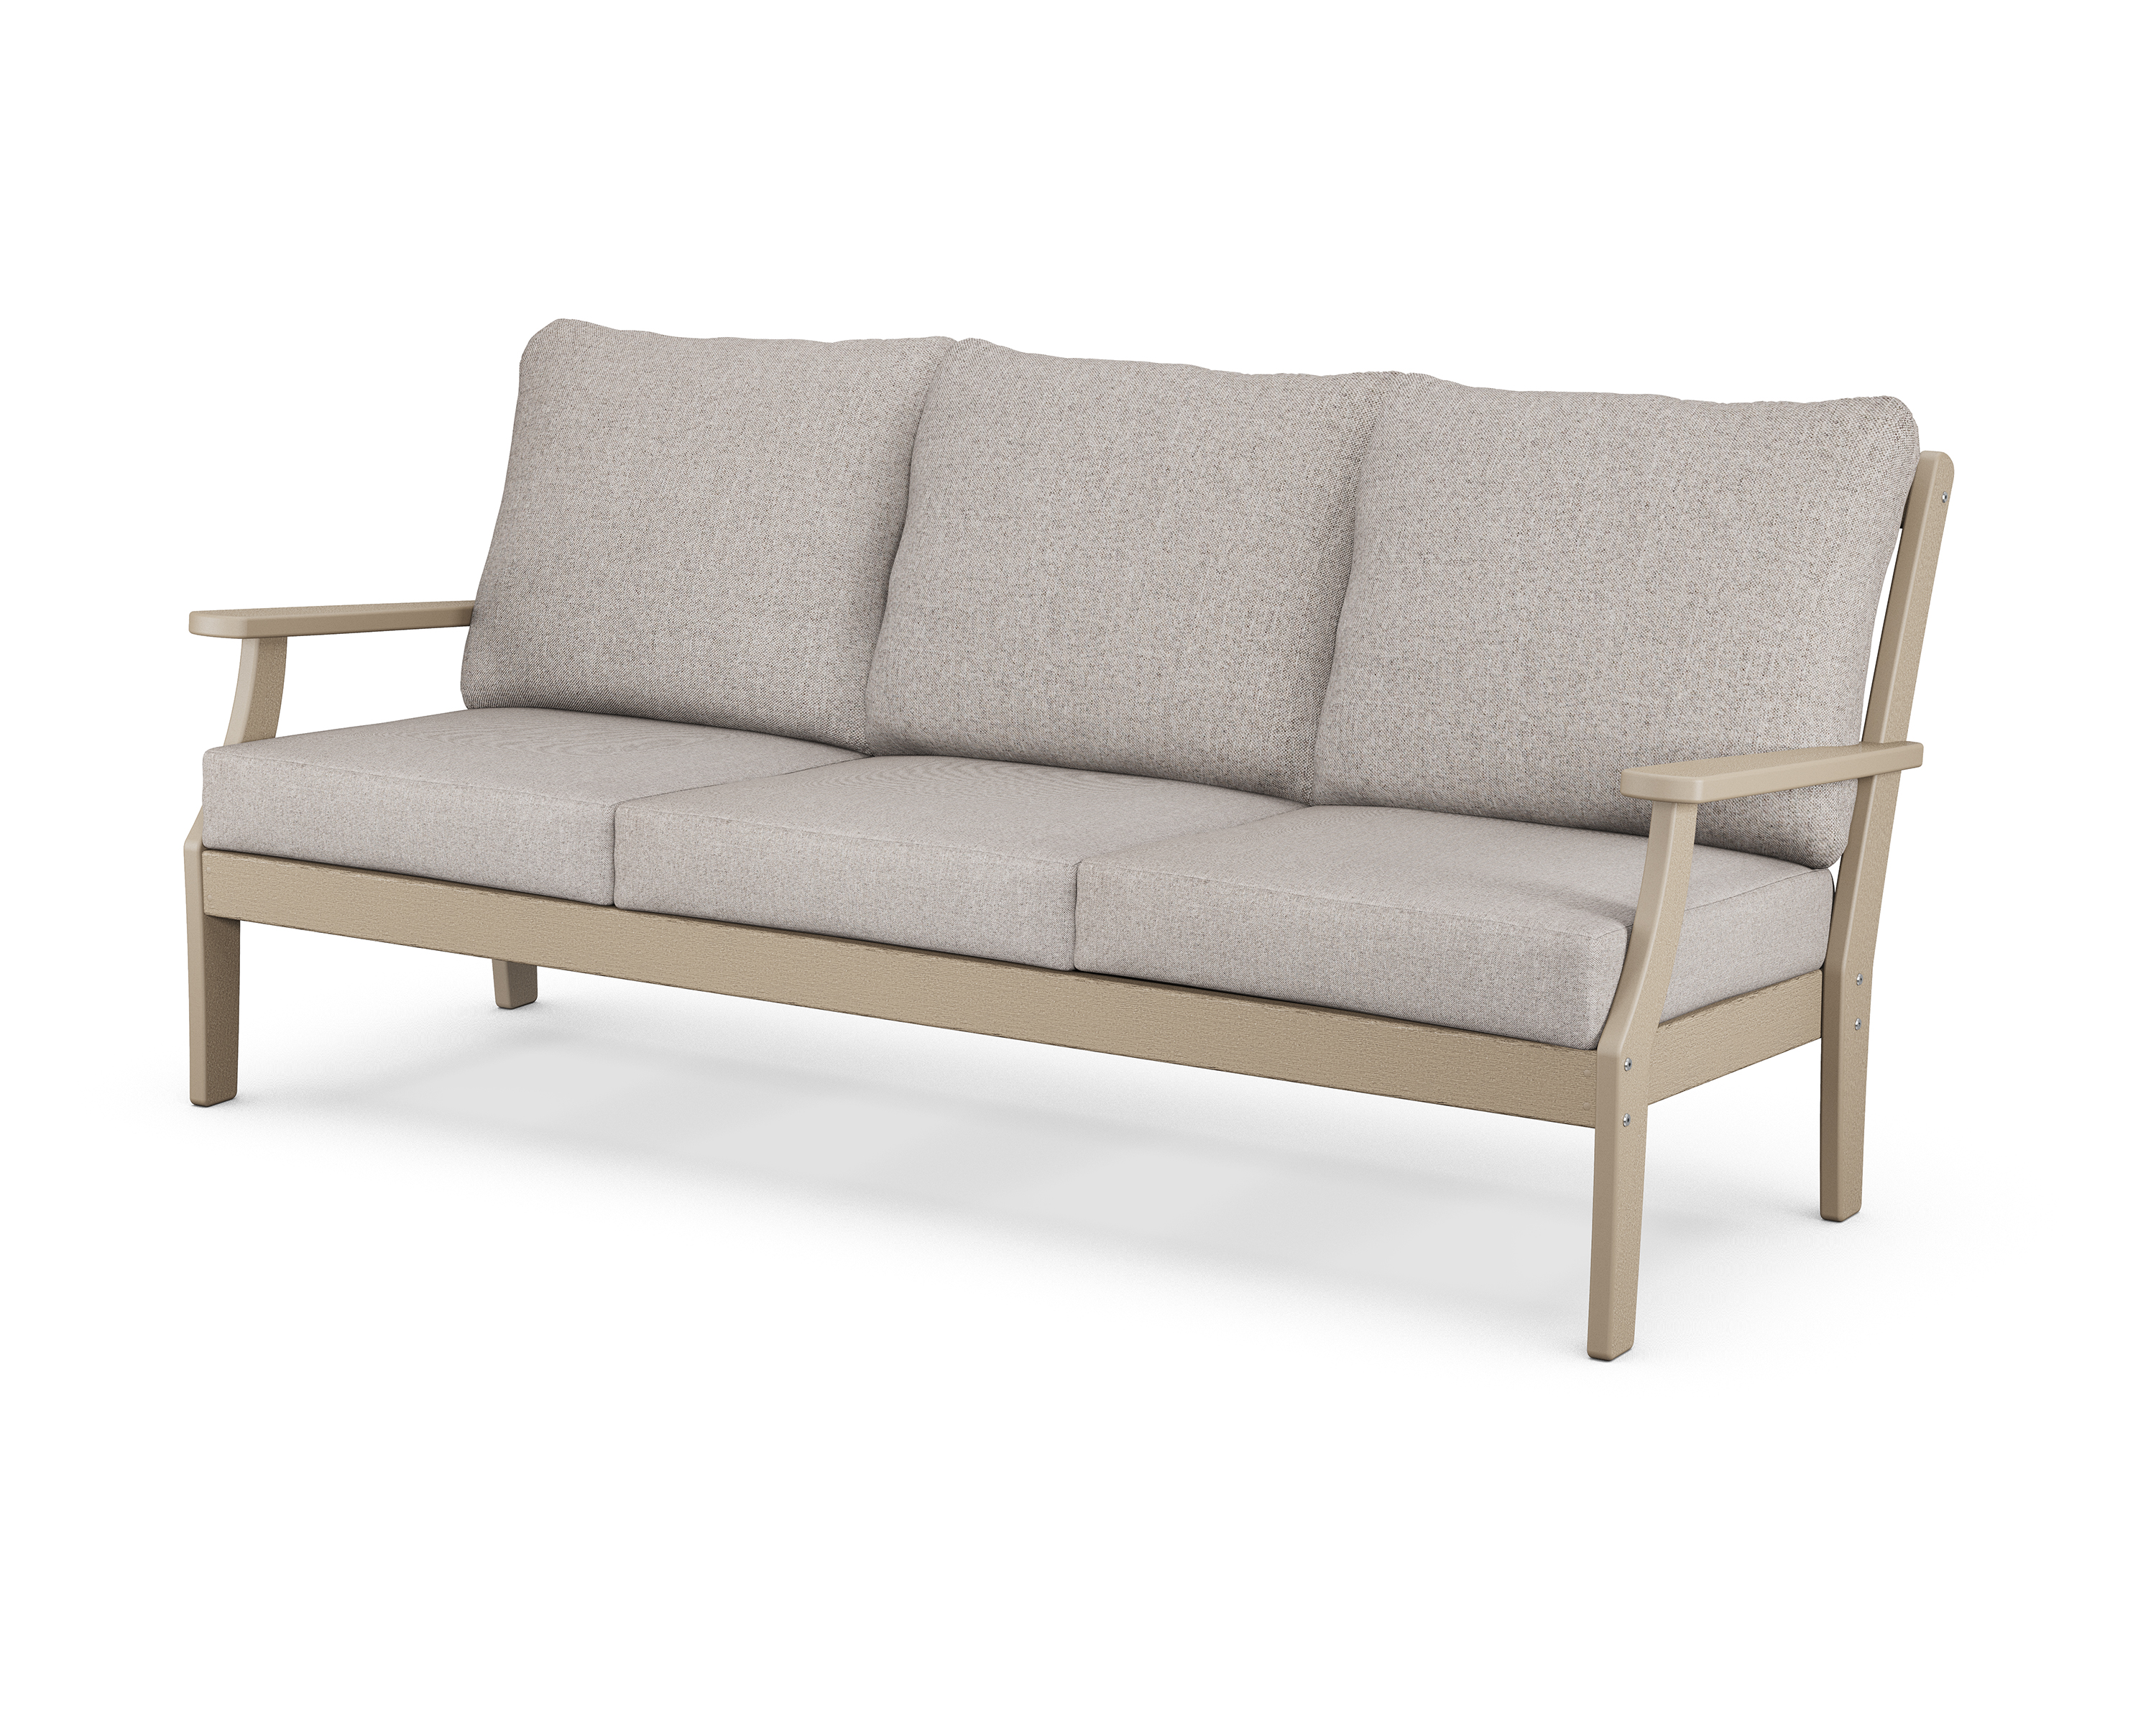 braxton deep seating sofa in vintage sahara / weathered tweed product image